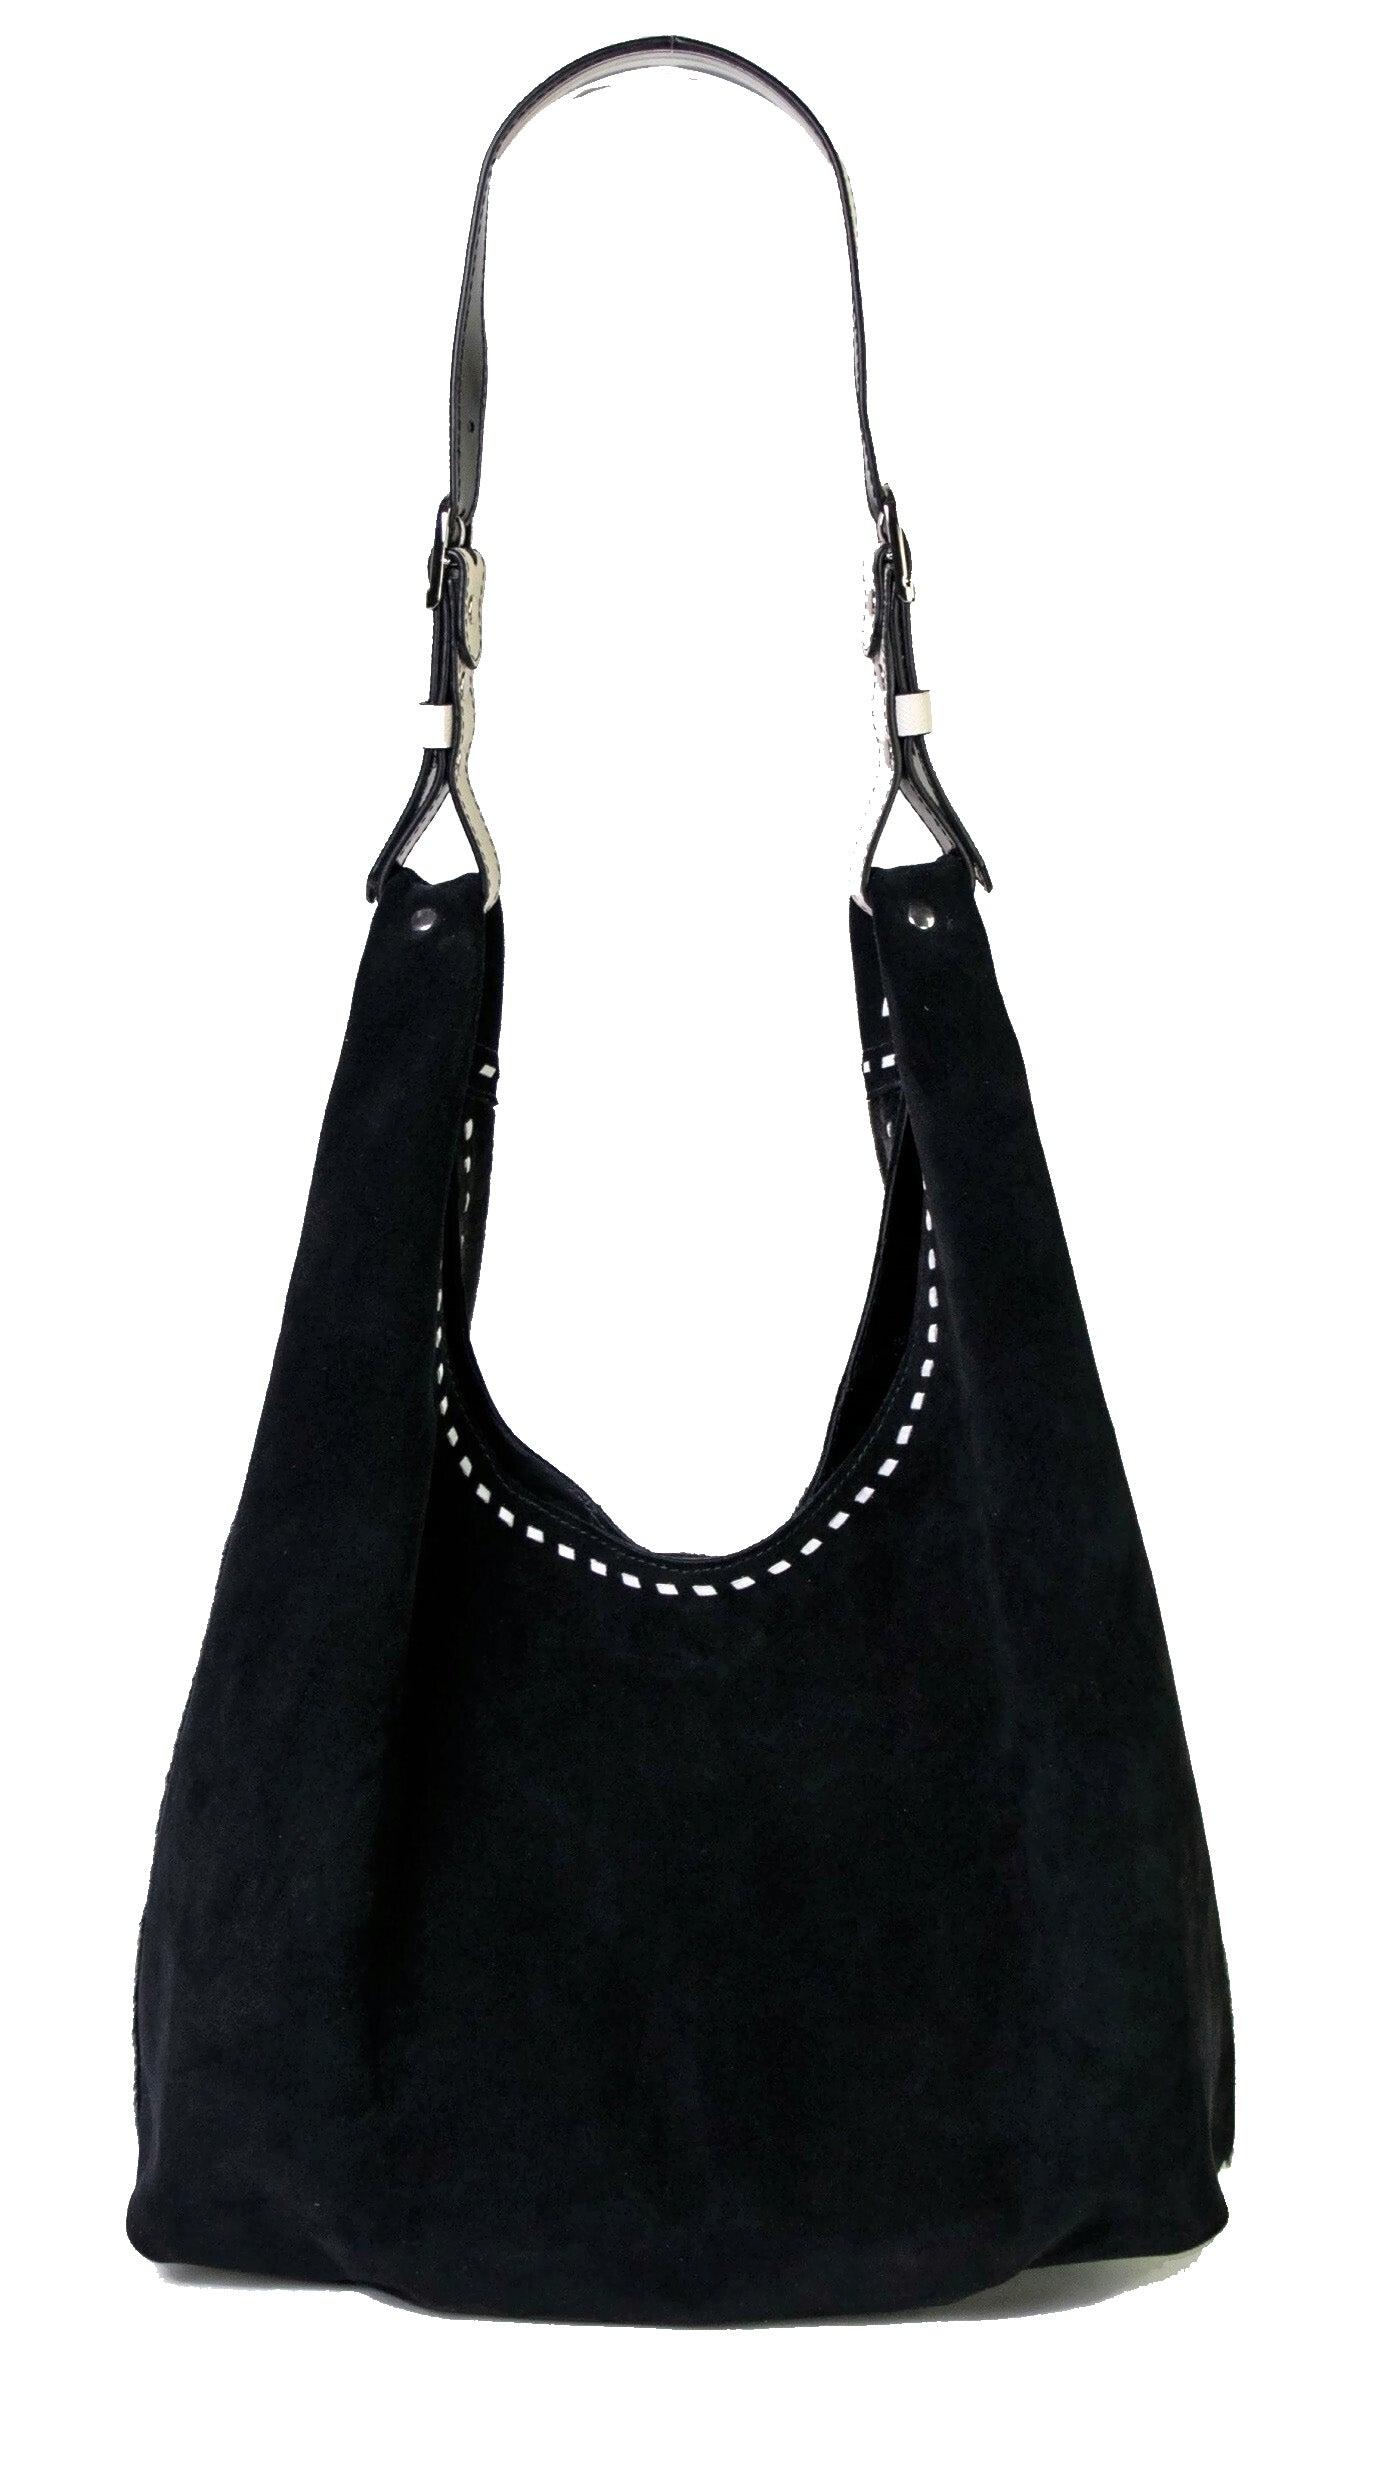 Kelly Style Hand Bag Koret Black Suede Purse/pin up g… - Gem